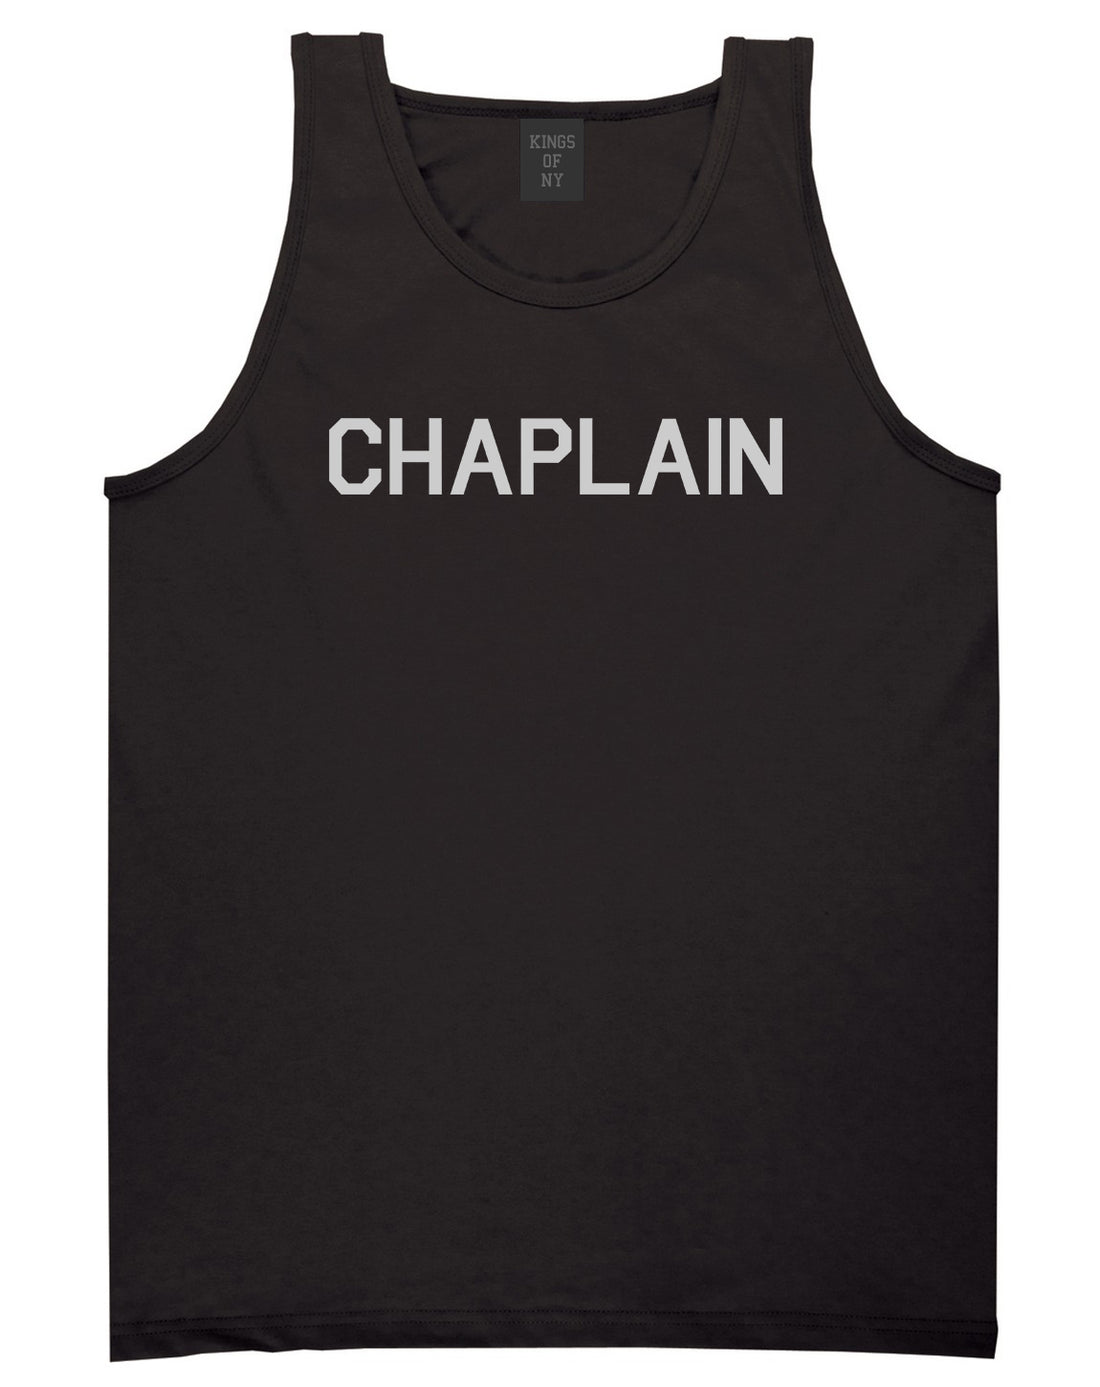 Christian Chaplain Black Tank Top Shirt by Kings Of NY